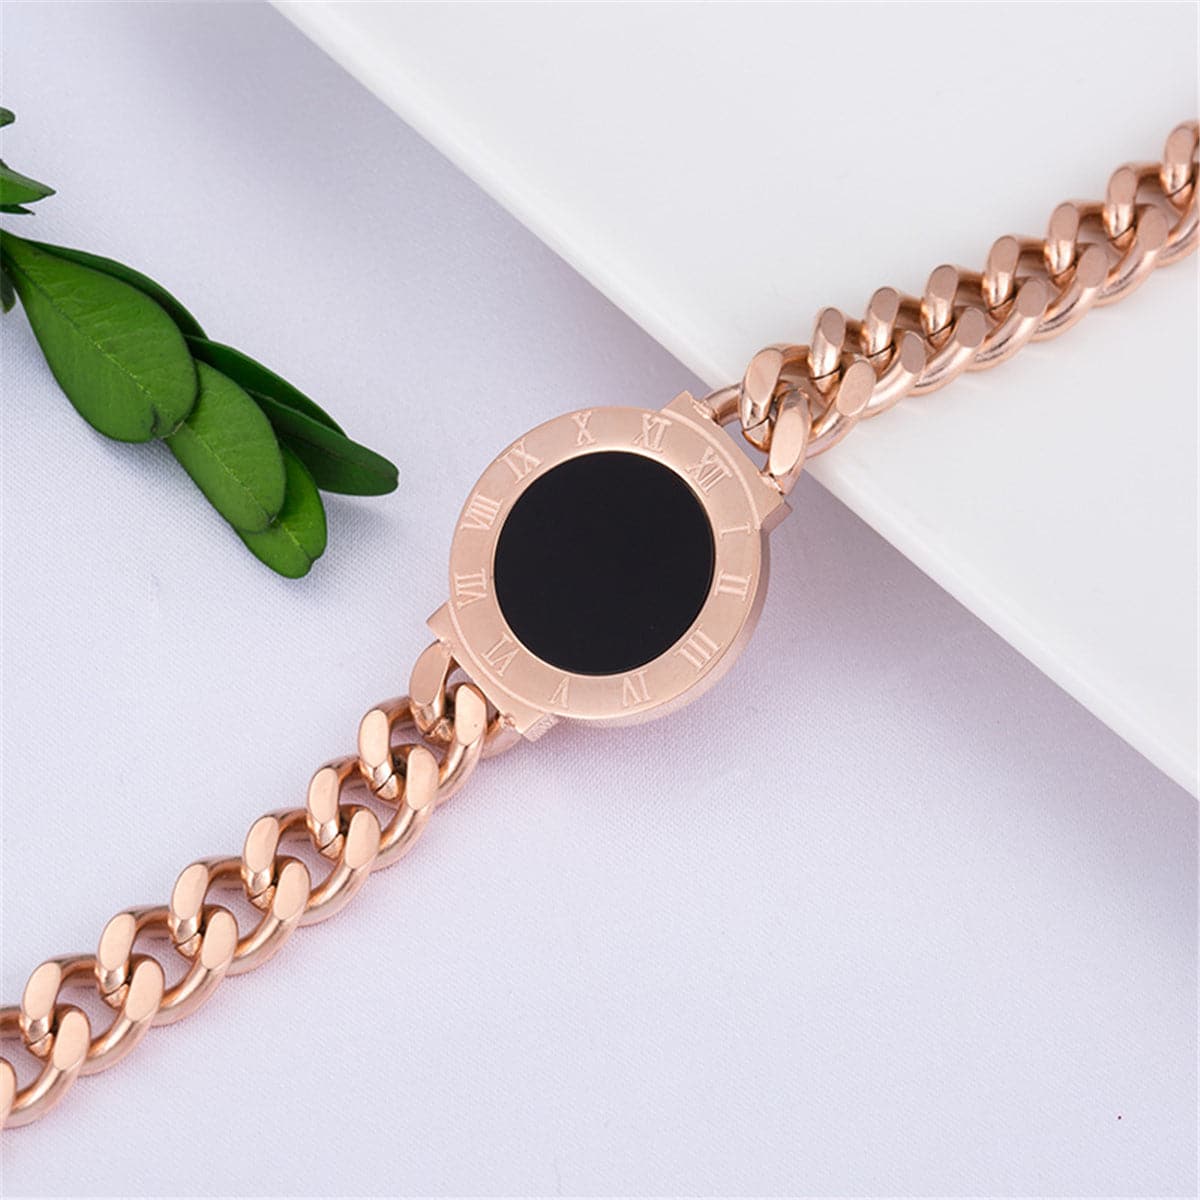 Black & 18K Rose Gold-Plated Chain Wrap Bracelet